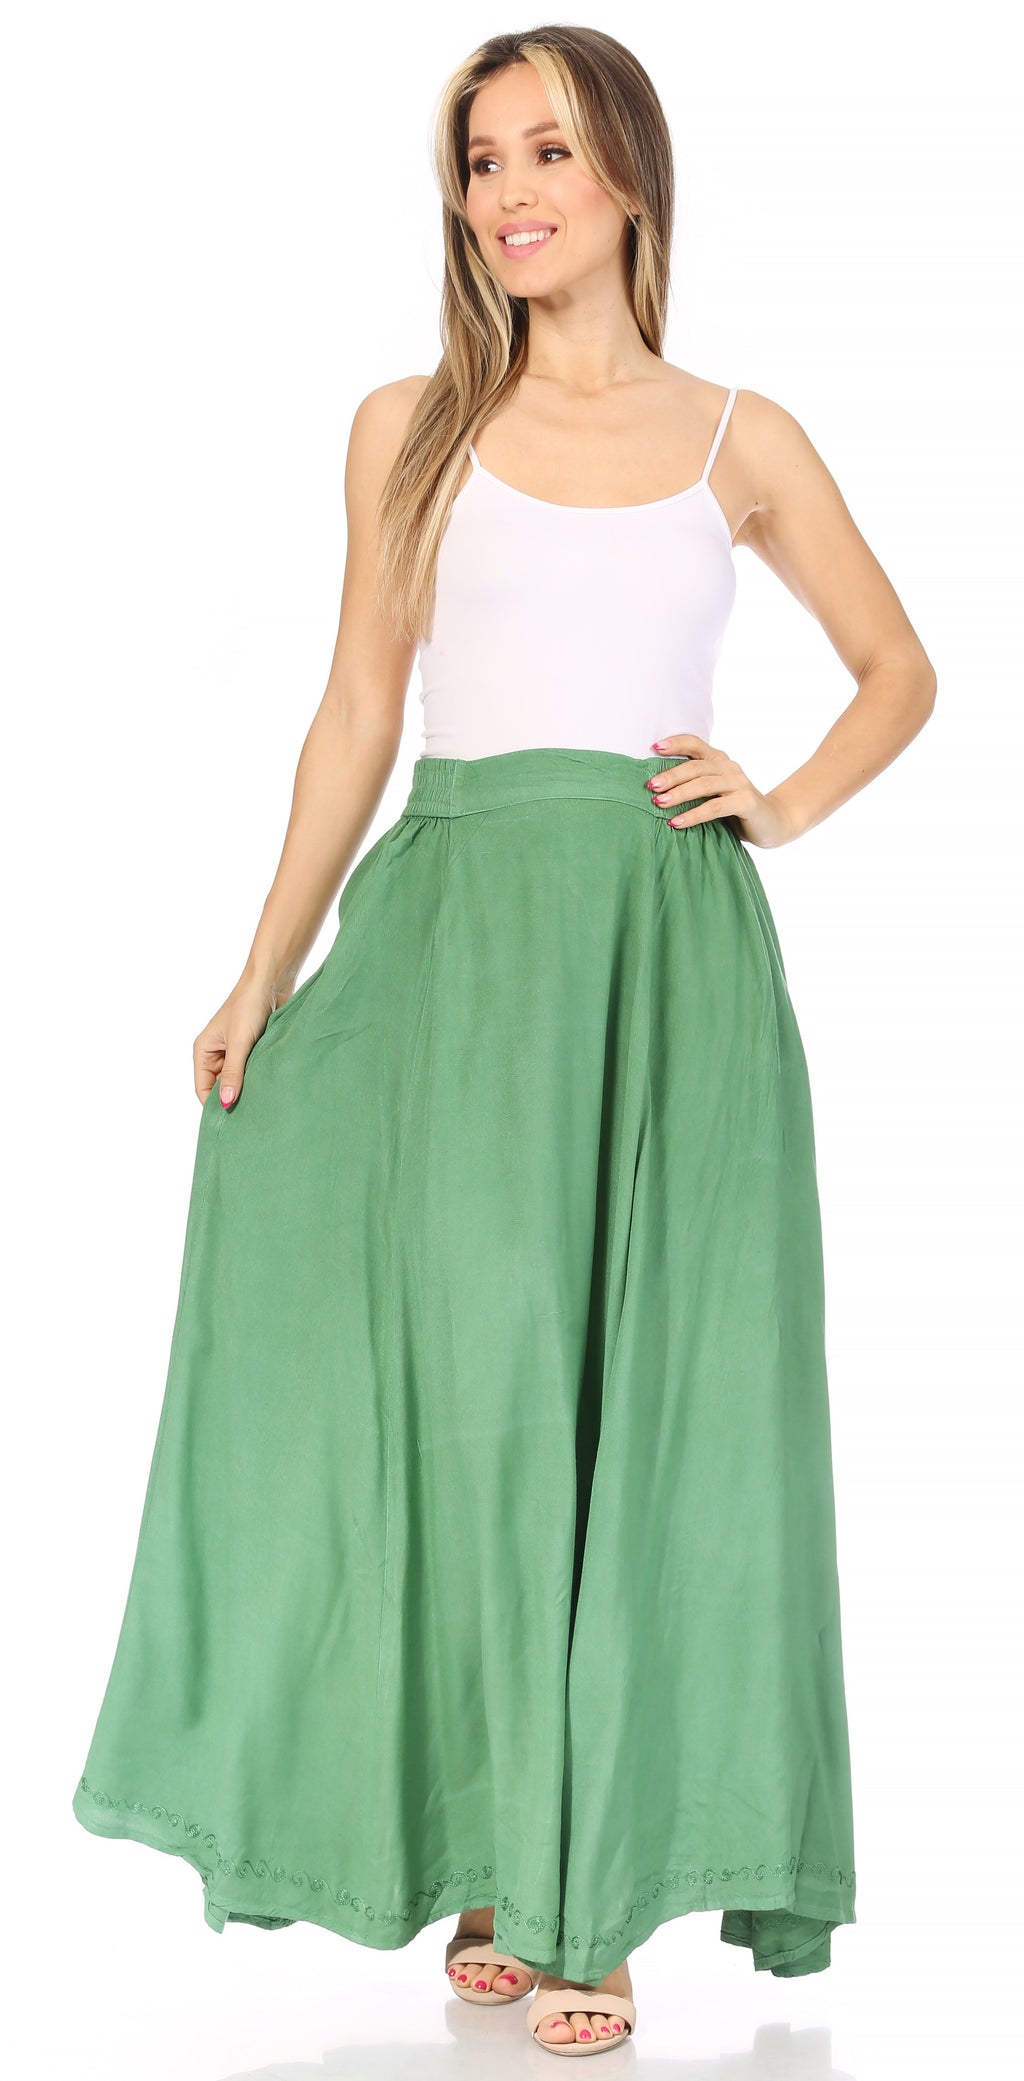 Sakkas Noemi Women's Long Maxi Summer Casual Boho Skirt Elastic Waist